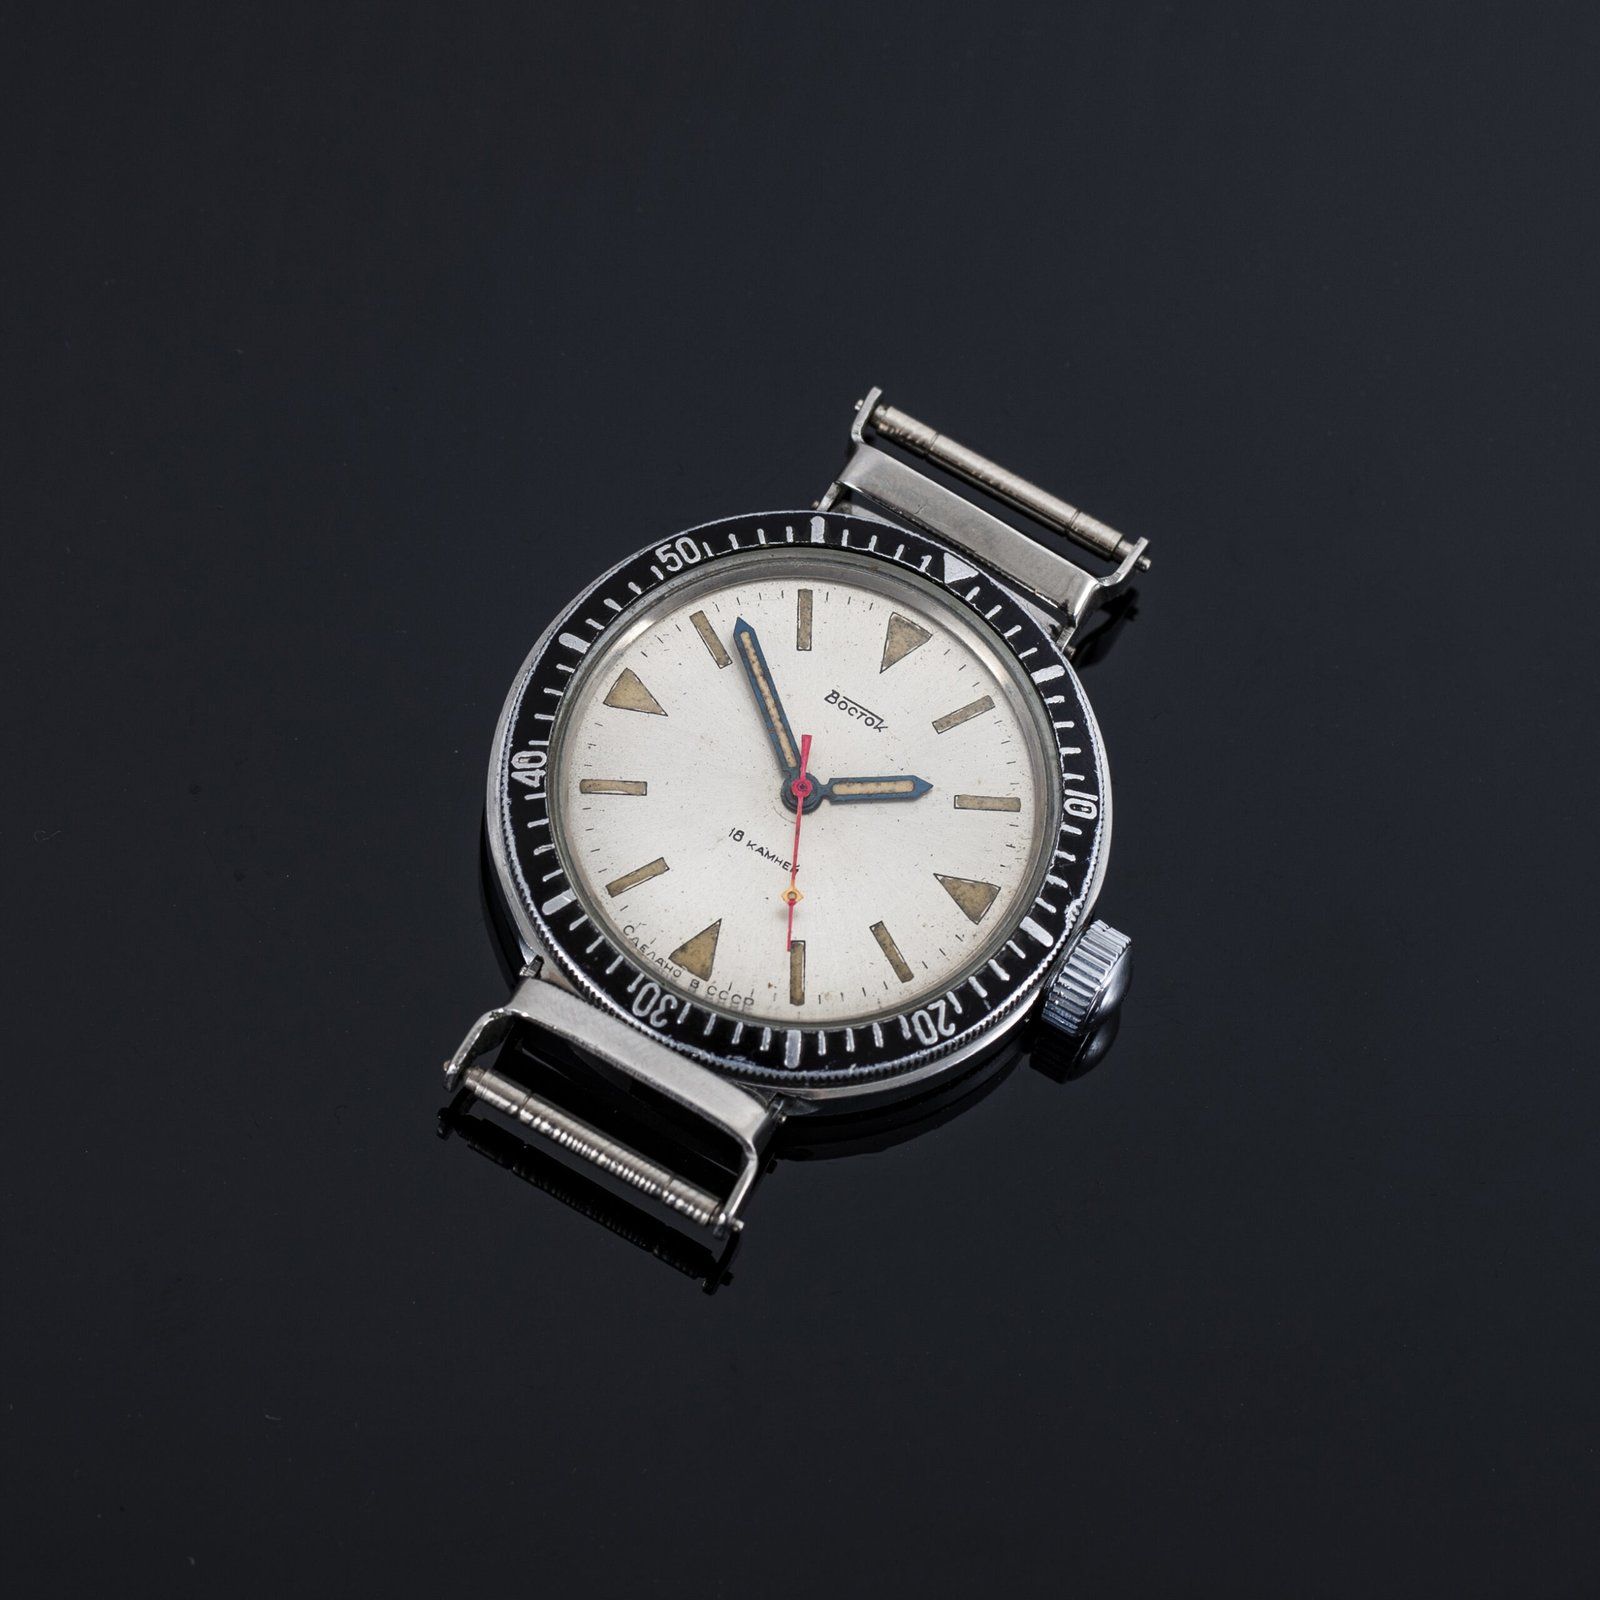 First Amphibian watch from Vostok watch factory ((Courtesy: Yuri Kravtsov; Instagram: sovietwatchmuseum)